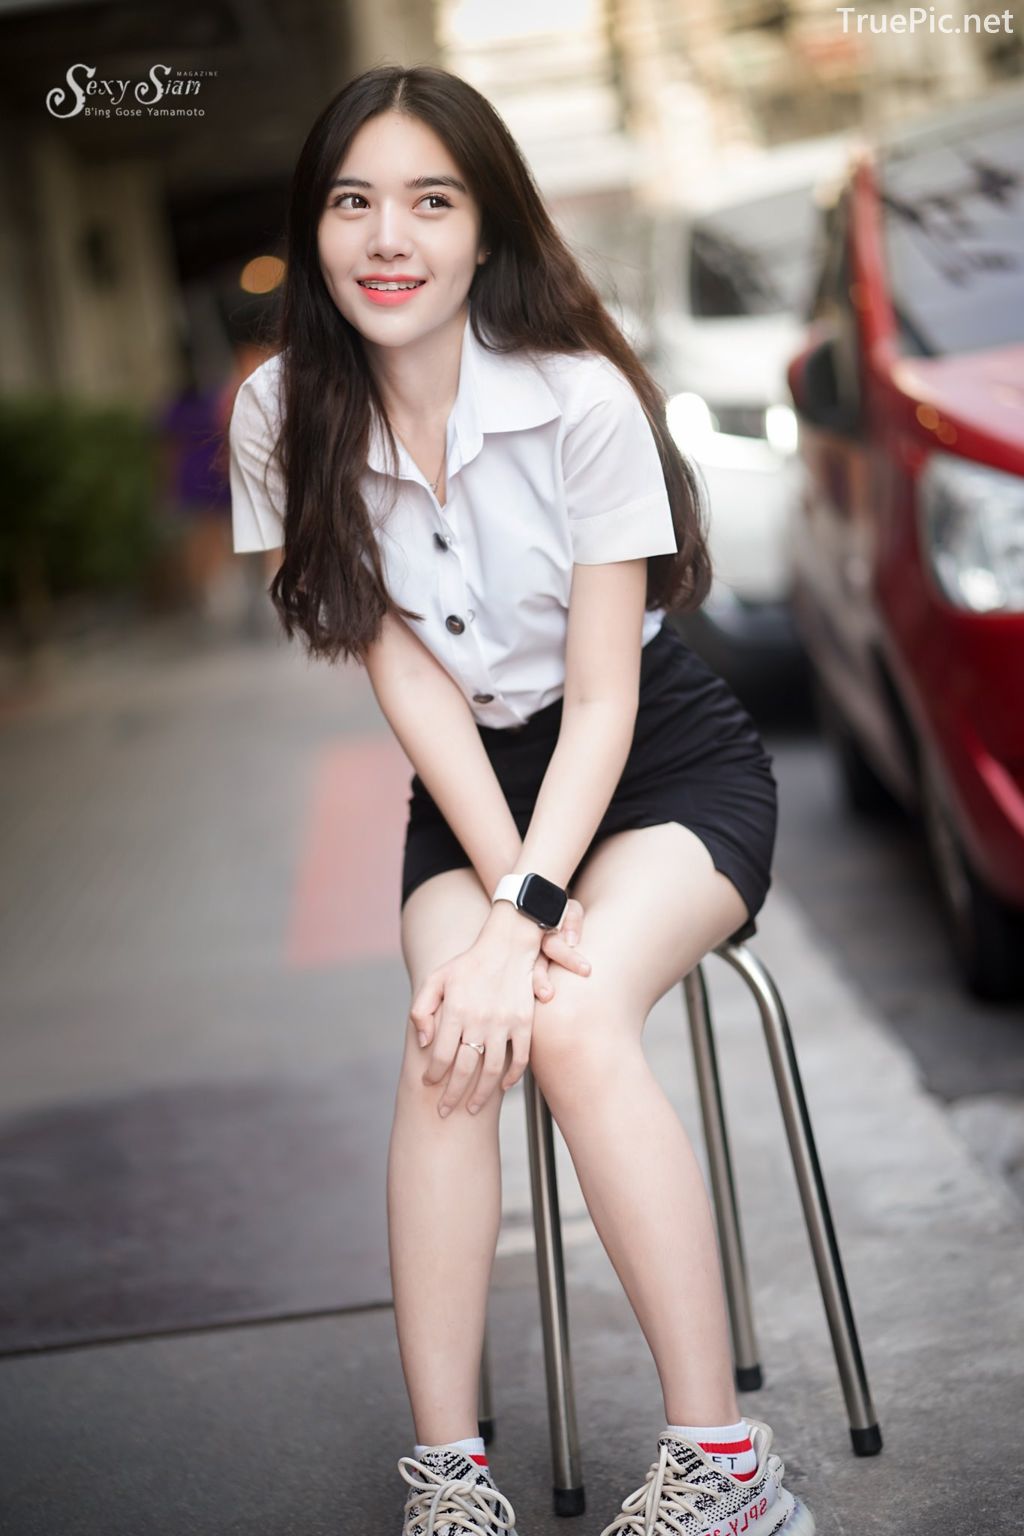 Thailand beautiful girl - Chonticha Chalimewong - Thai Girl Student uniform - TruePic.net - Picture 29